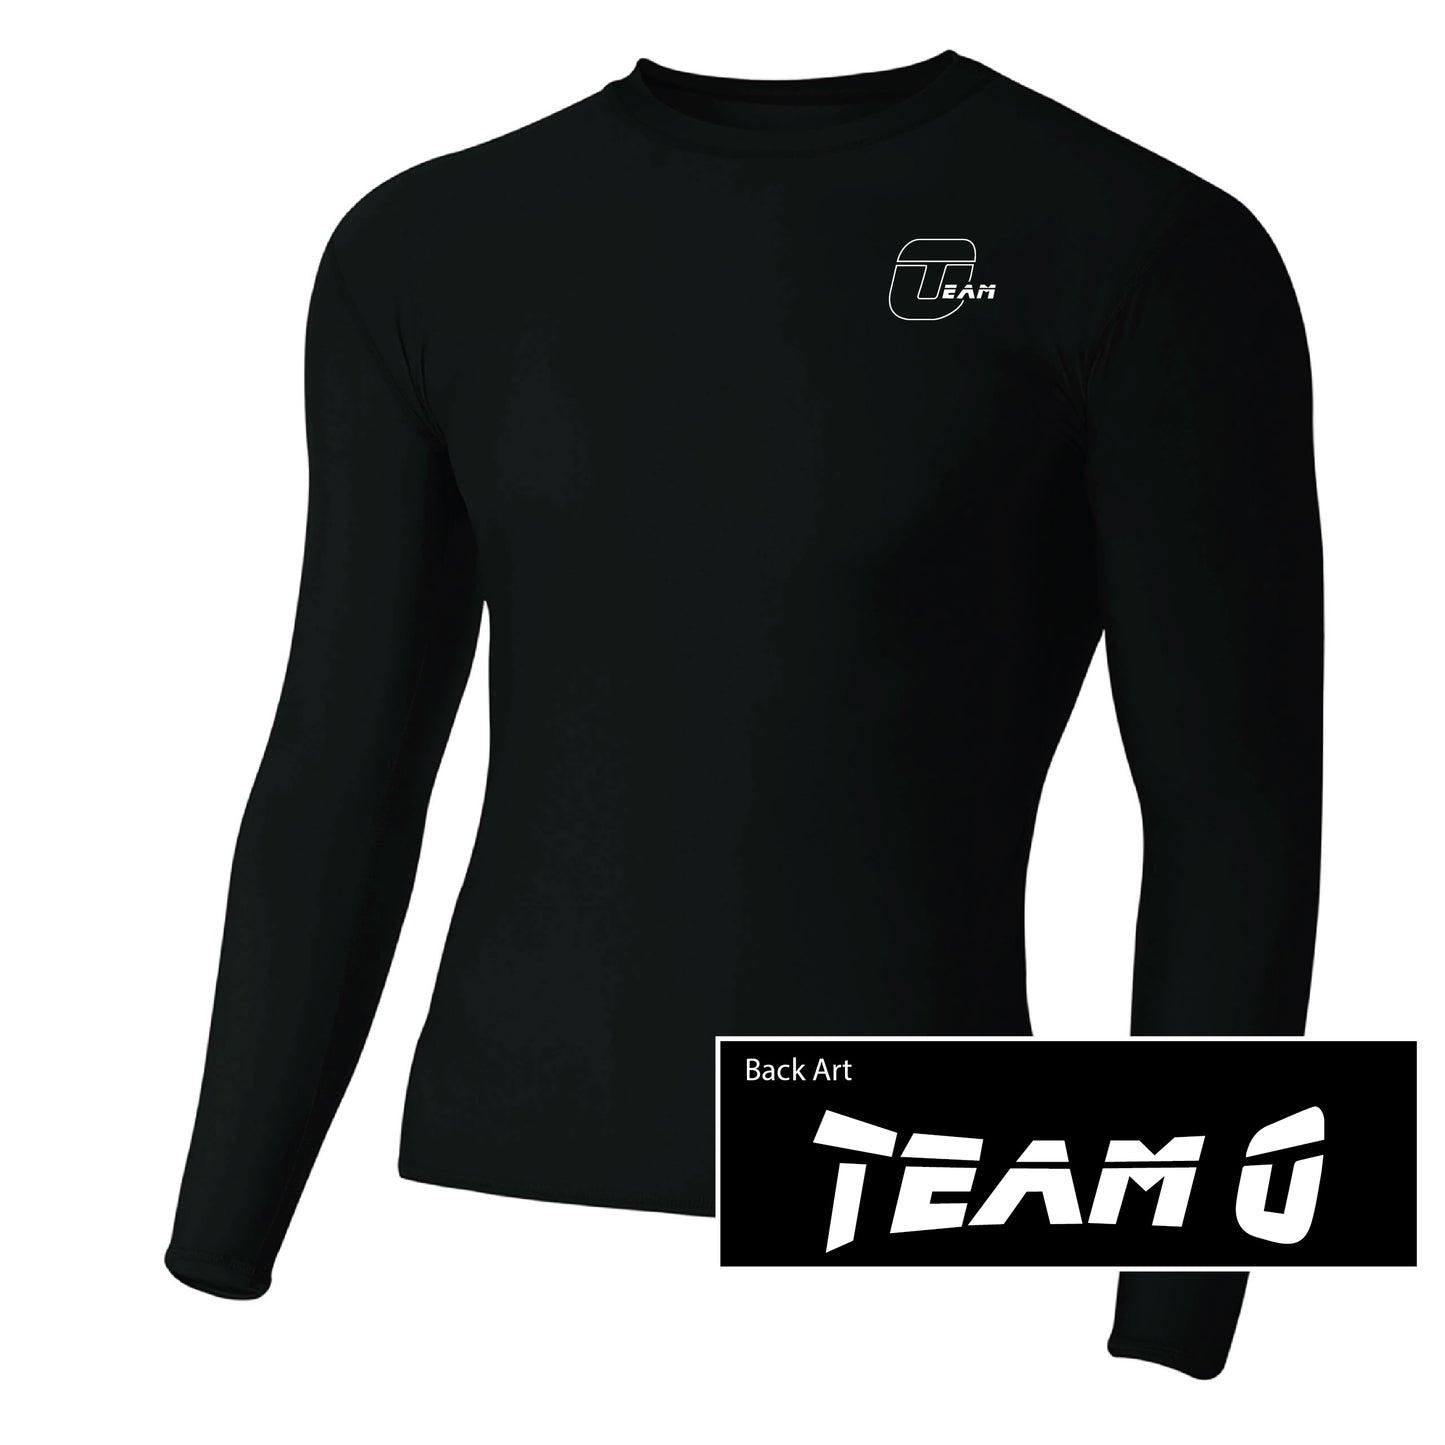 Team O A4 Adult Long Sleeve Compression T-Shirt